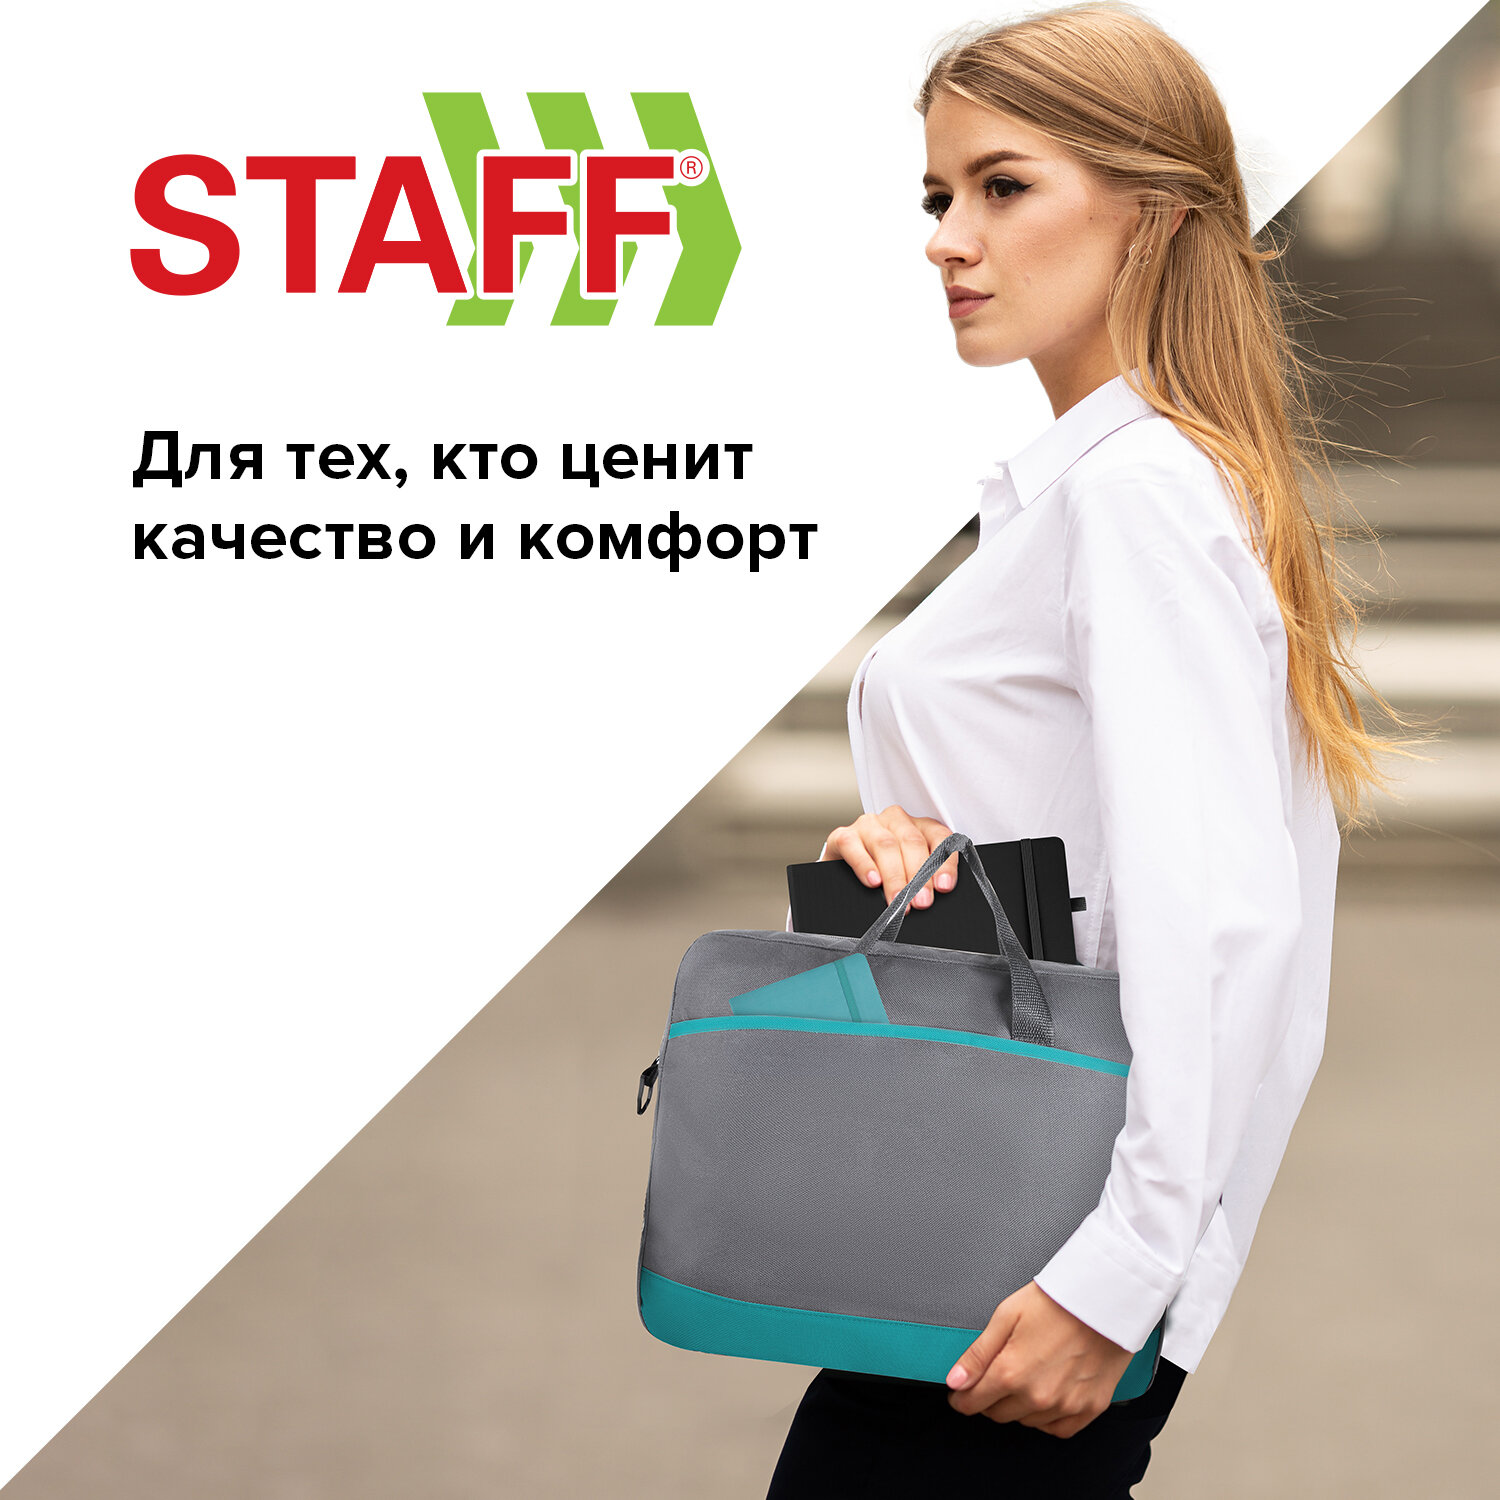 Папка-сумка Staff на молнии с карманом - фото 7